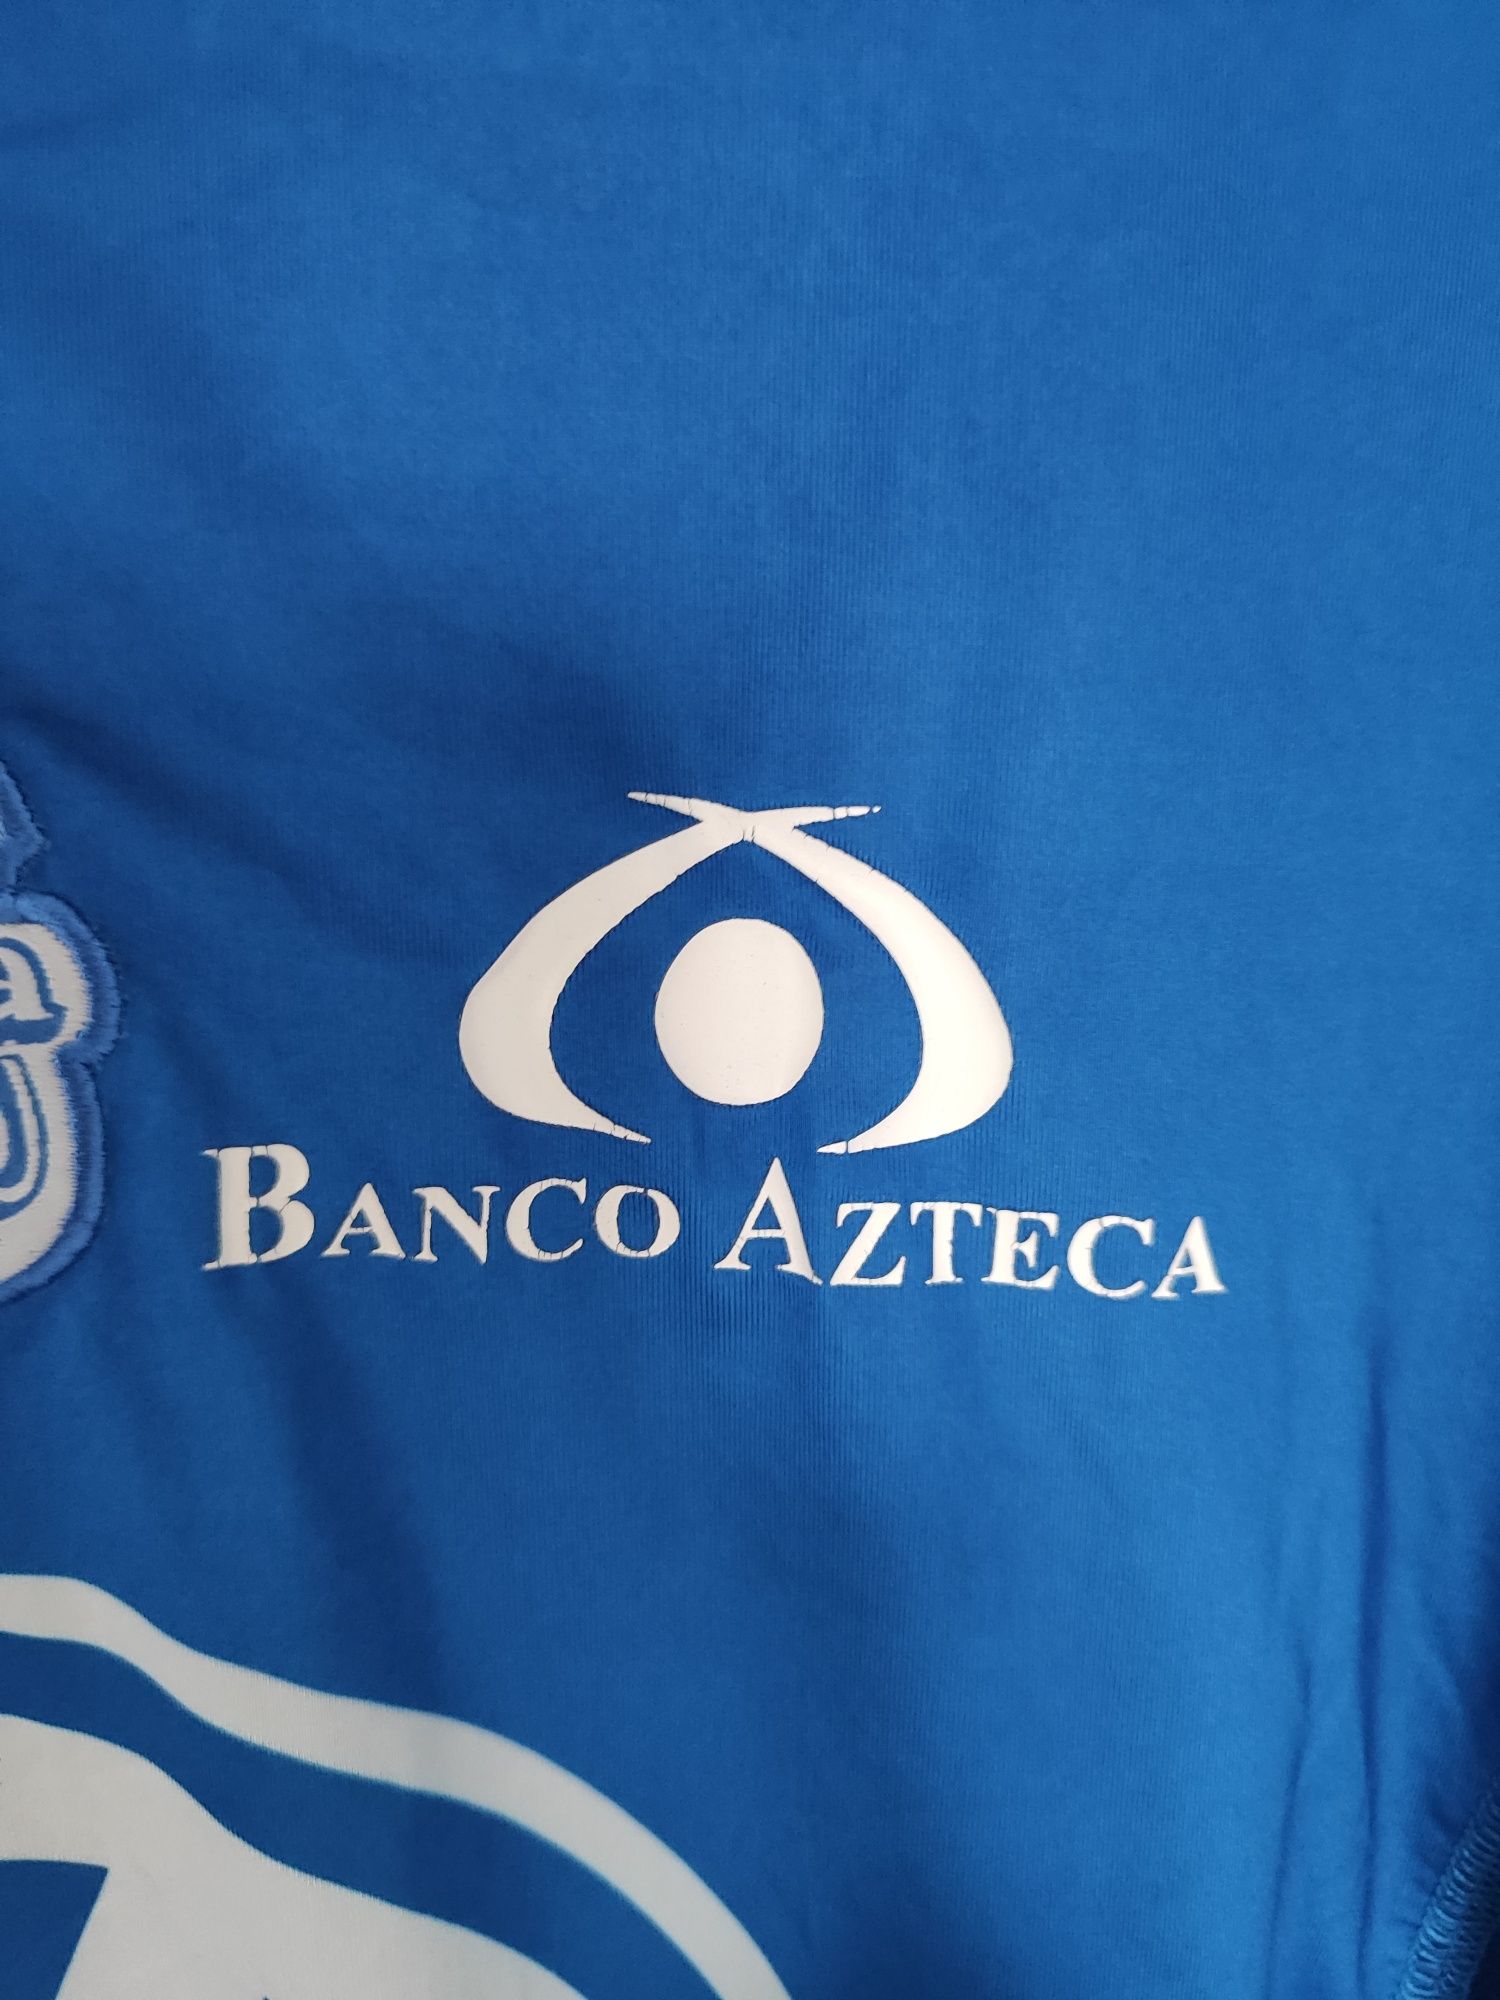 Koszulka piłkarska męska Kappa Club Puebla 2011/12 rozmiar M